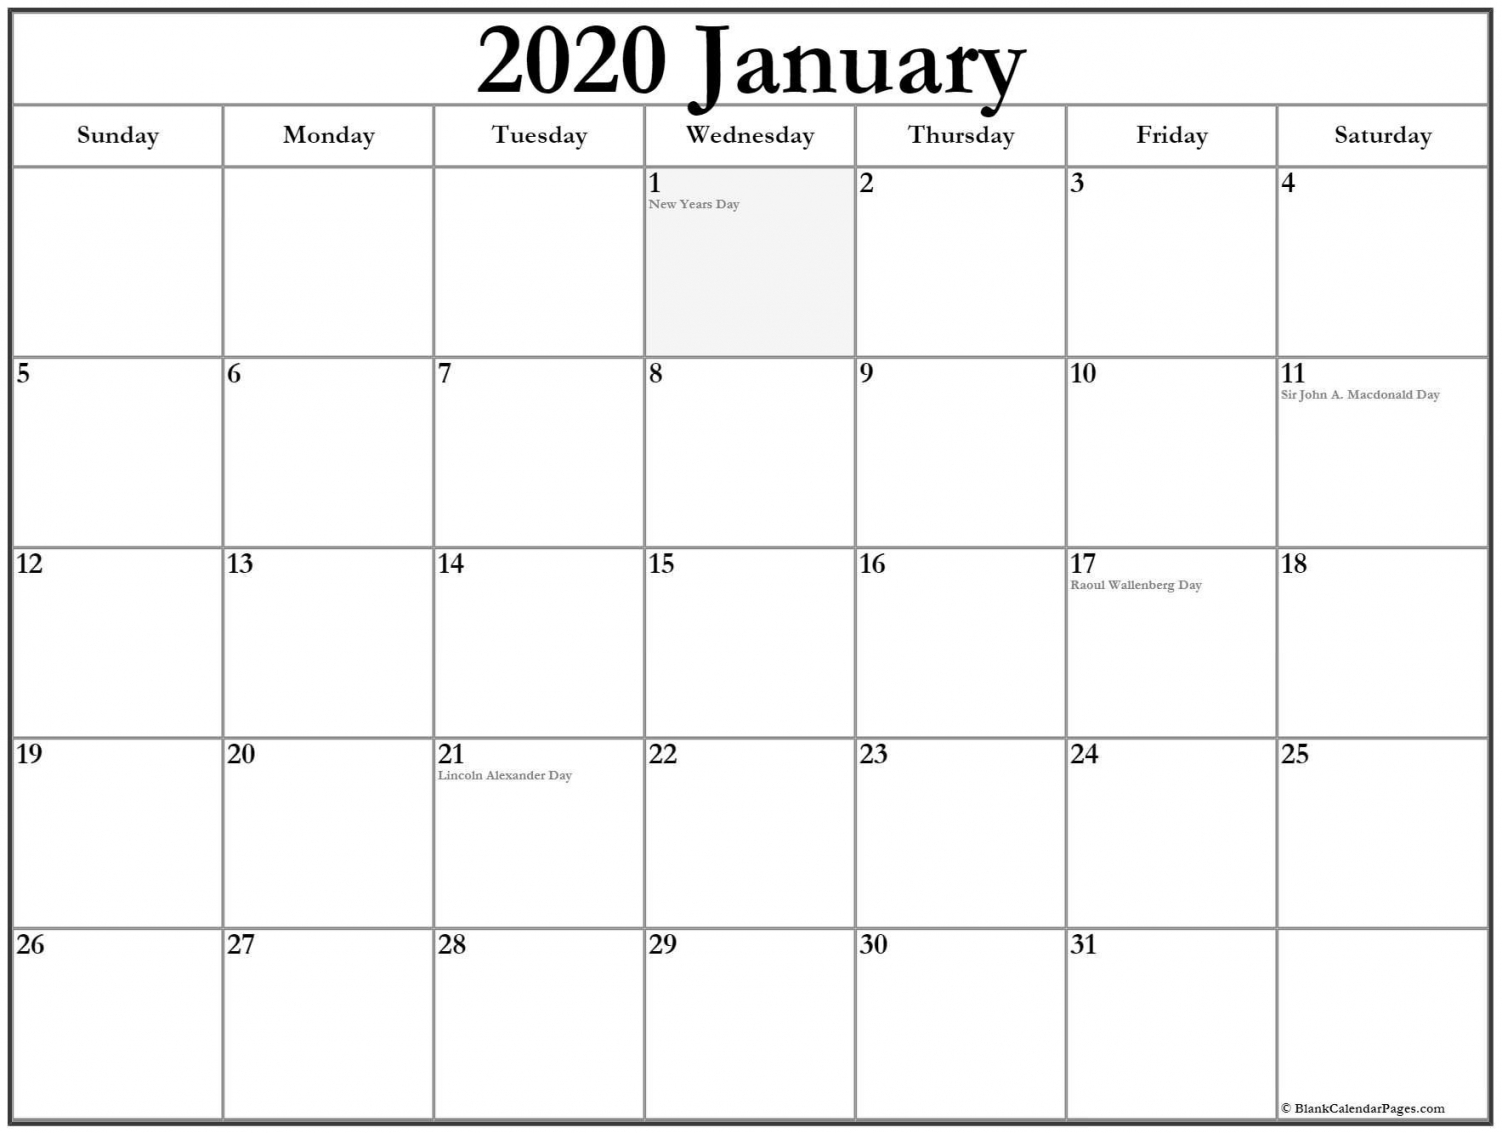 January 2020 Calendar With Holidays | Canadian Calendar